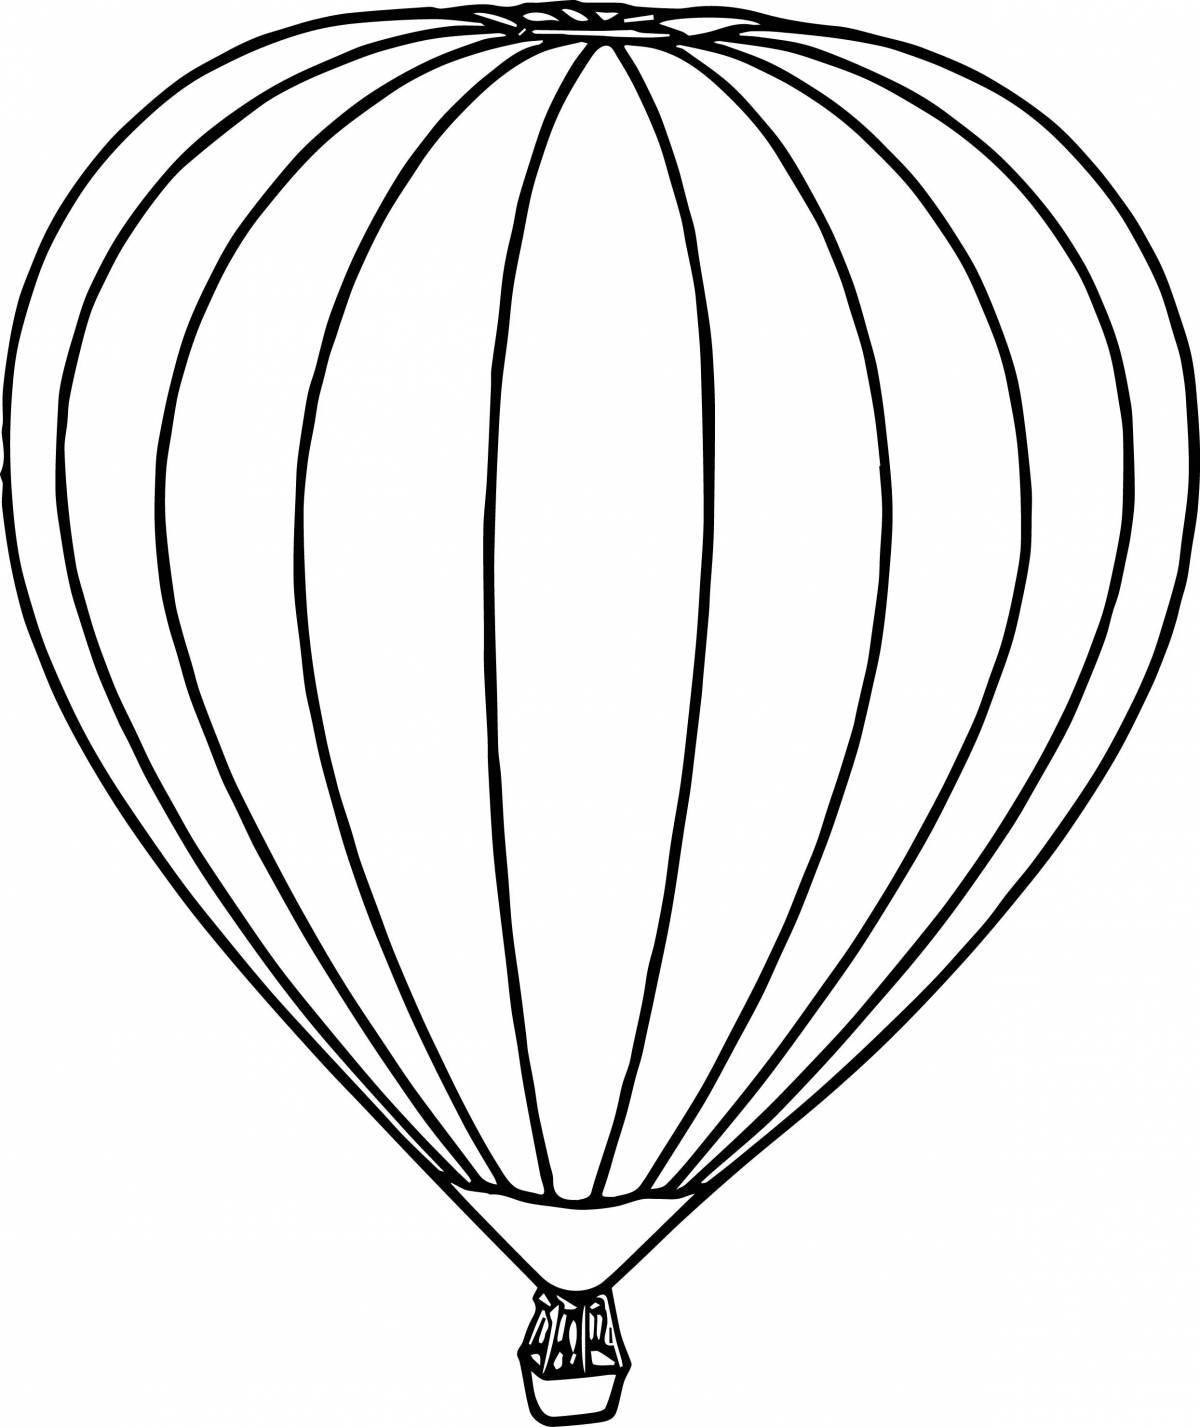 Happy balloon drawing